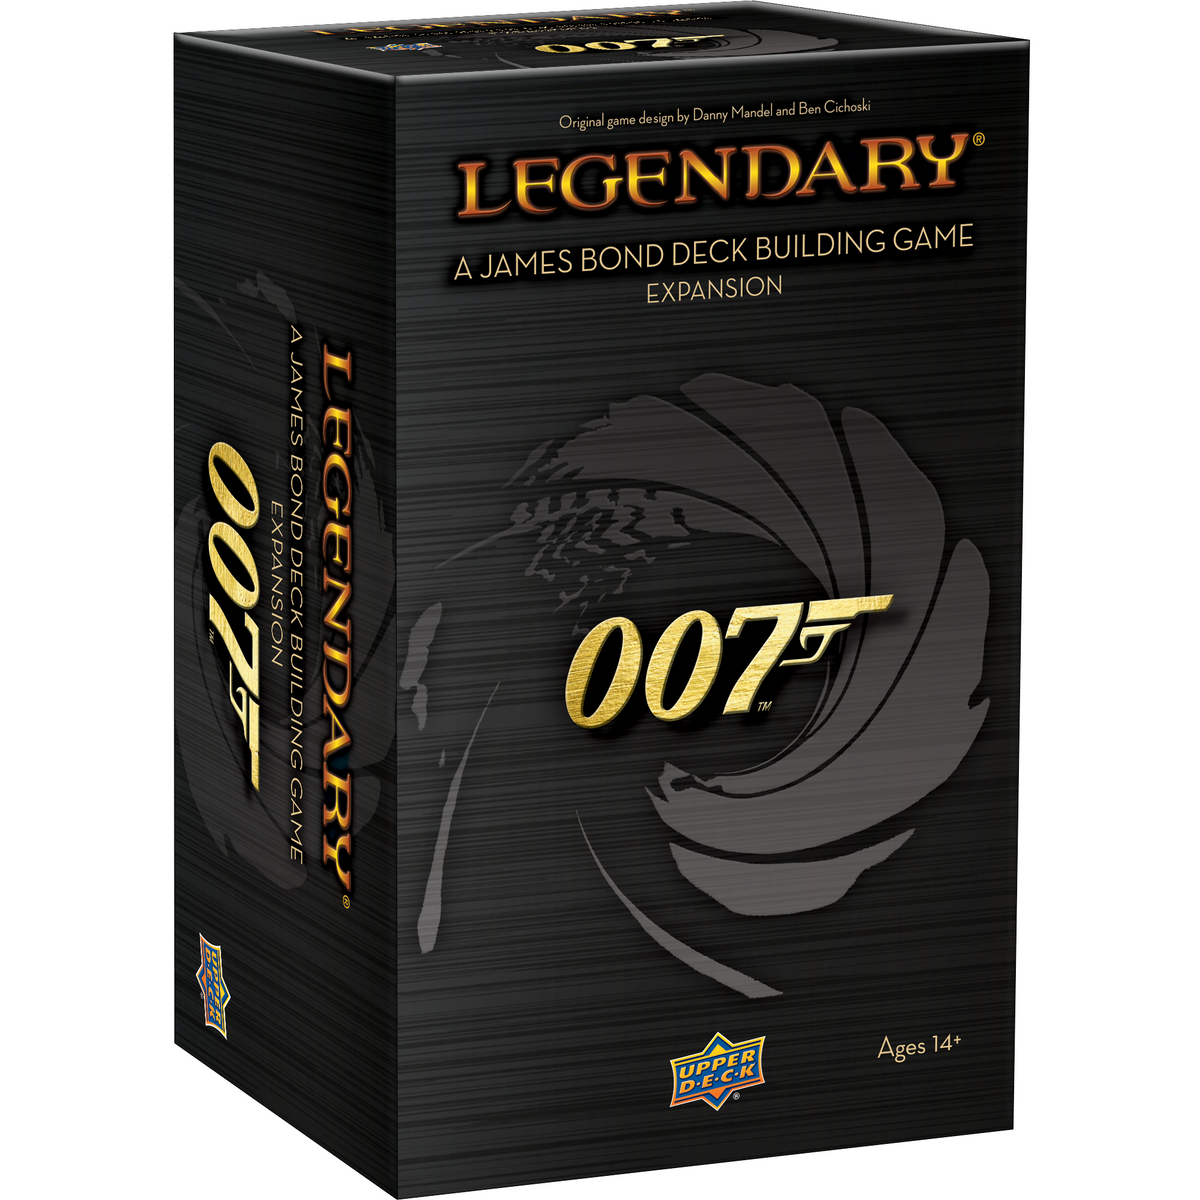 007 James Bond Legendary Expansion Set - By Upper Deck - 007STORE